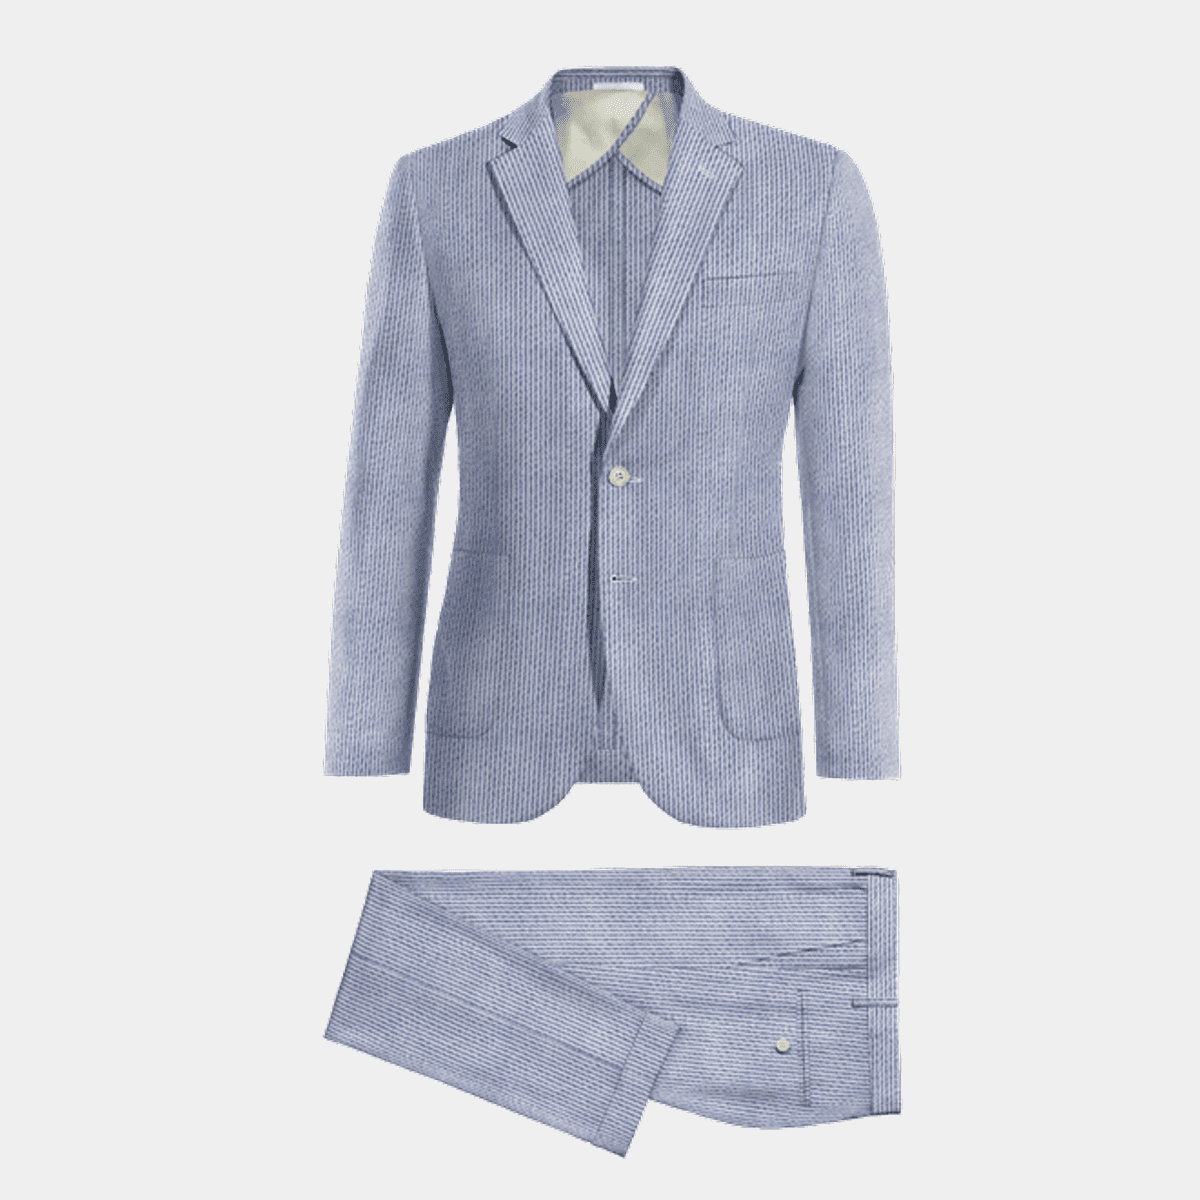 Faded blue lightweight seersucker essential unlined Suit